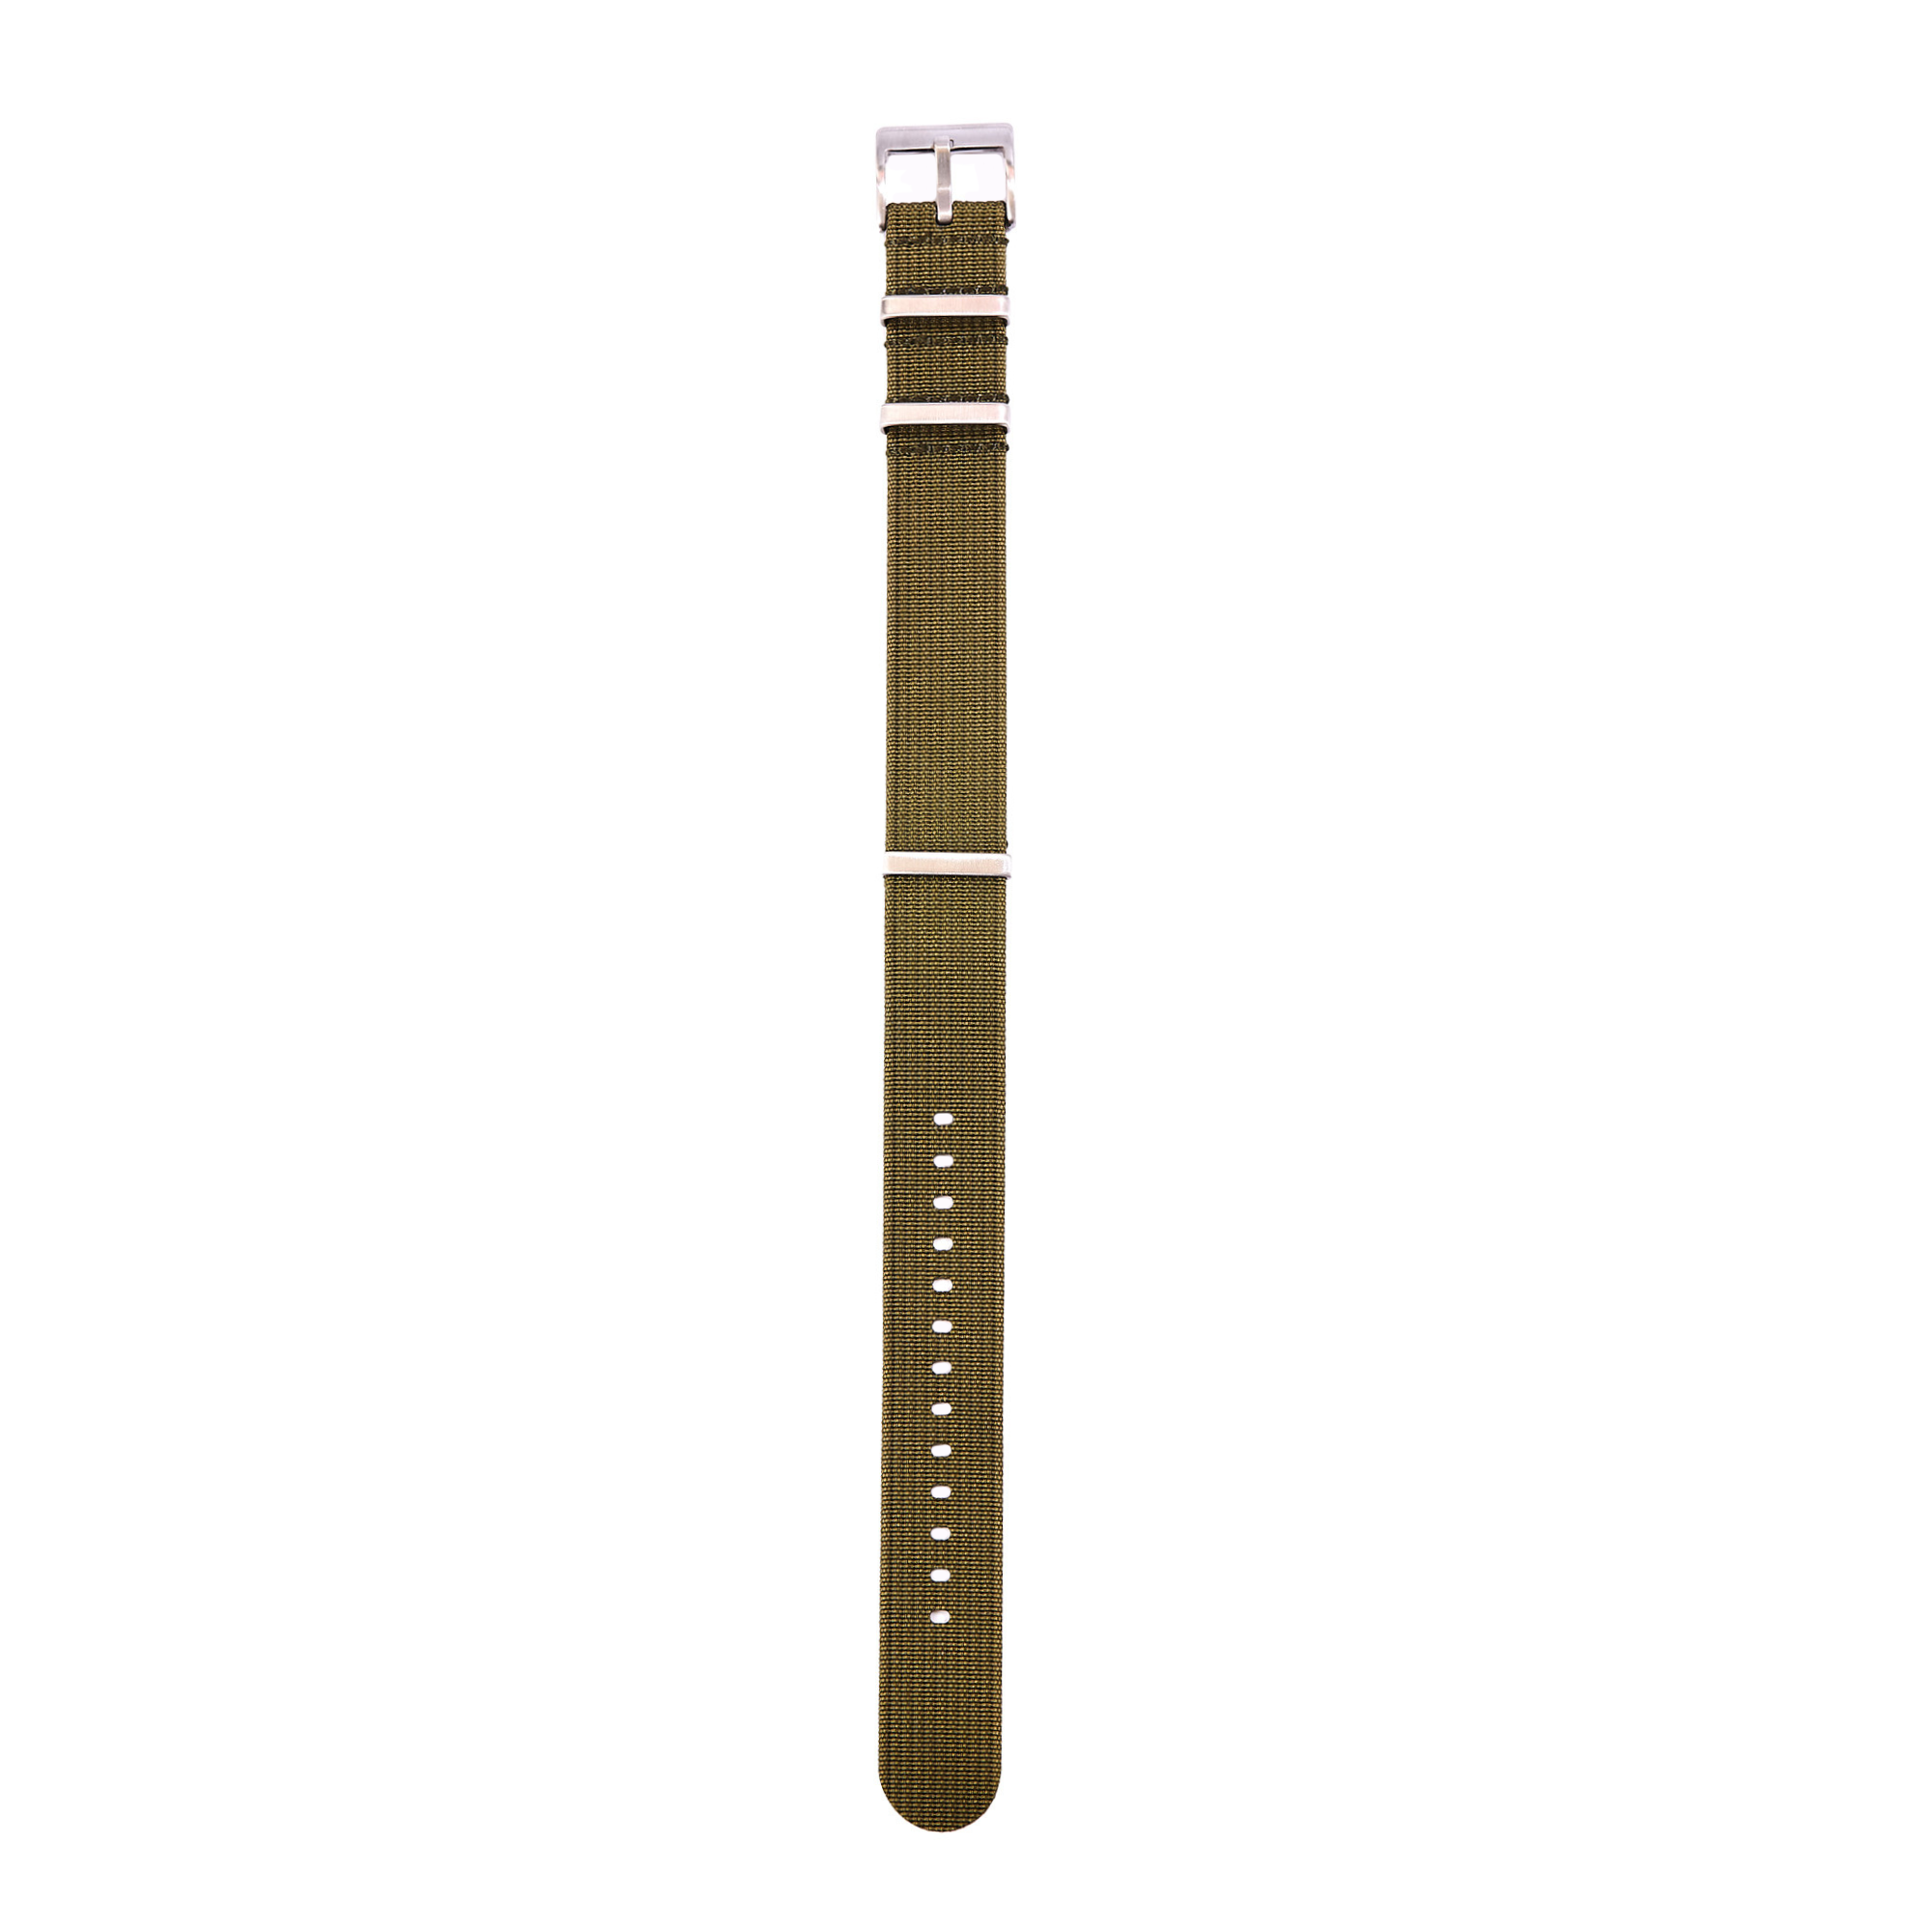 Ribbed Ballistic Nylon Strap - Army Green (2416)